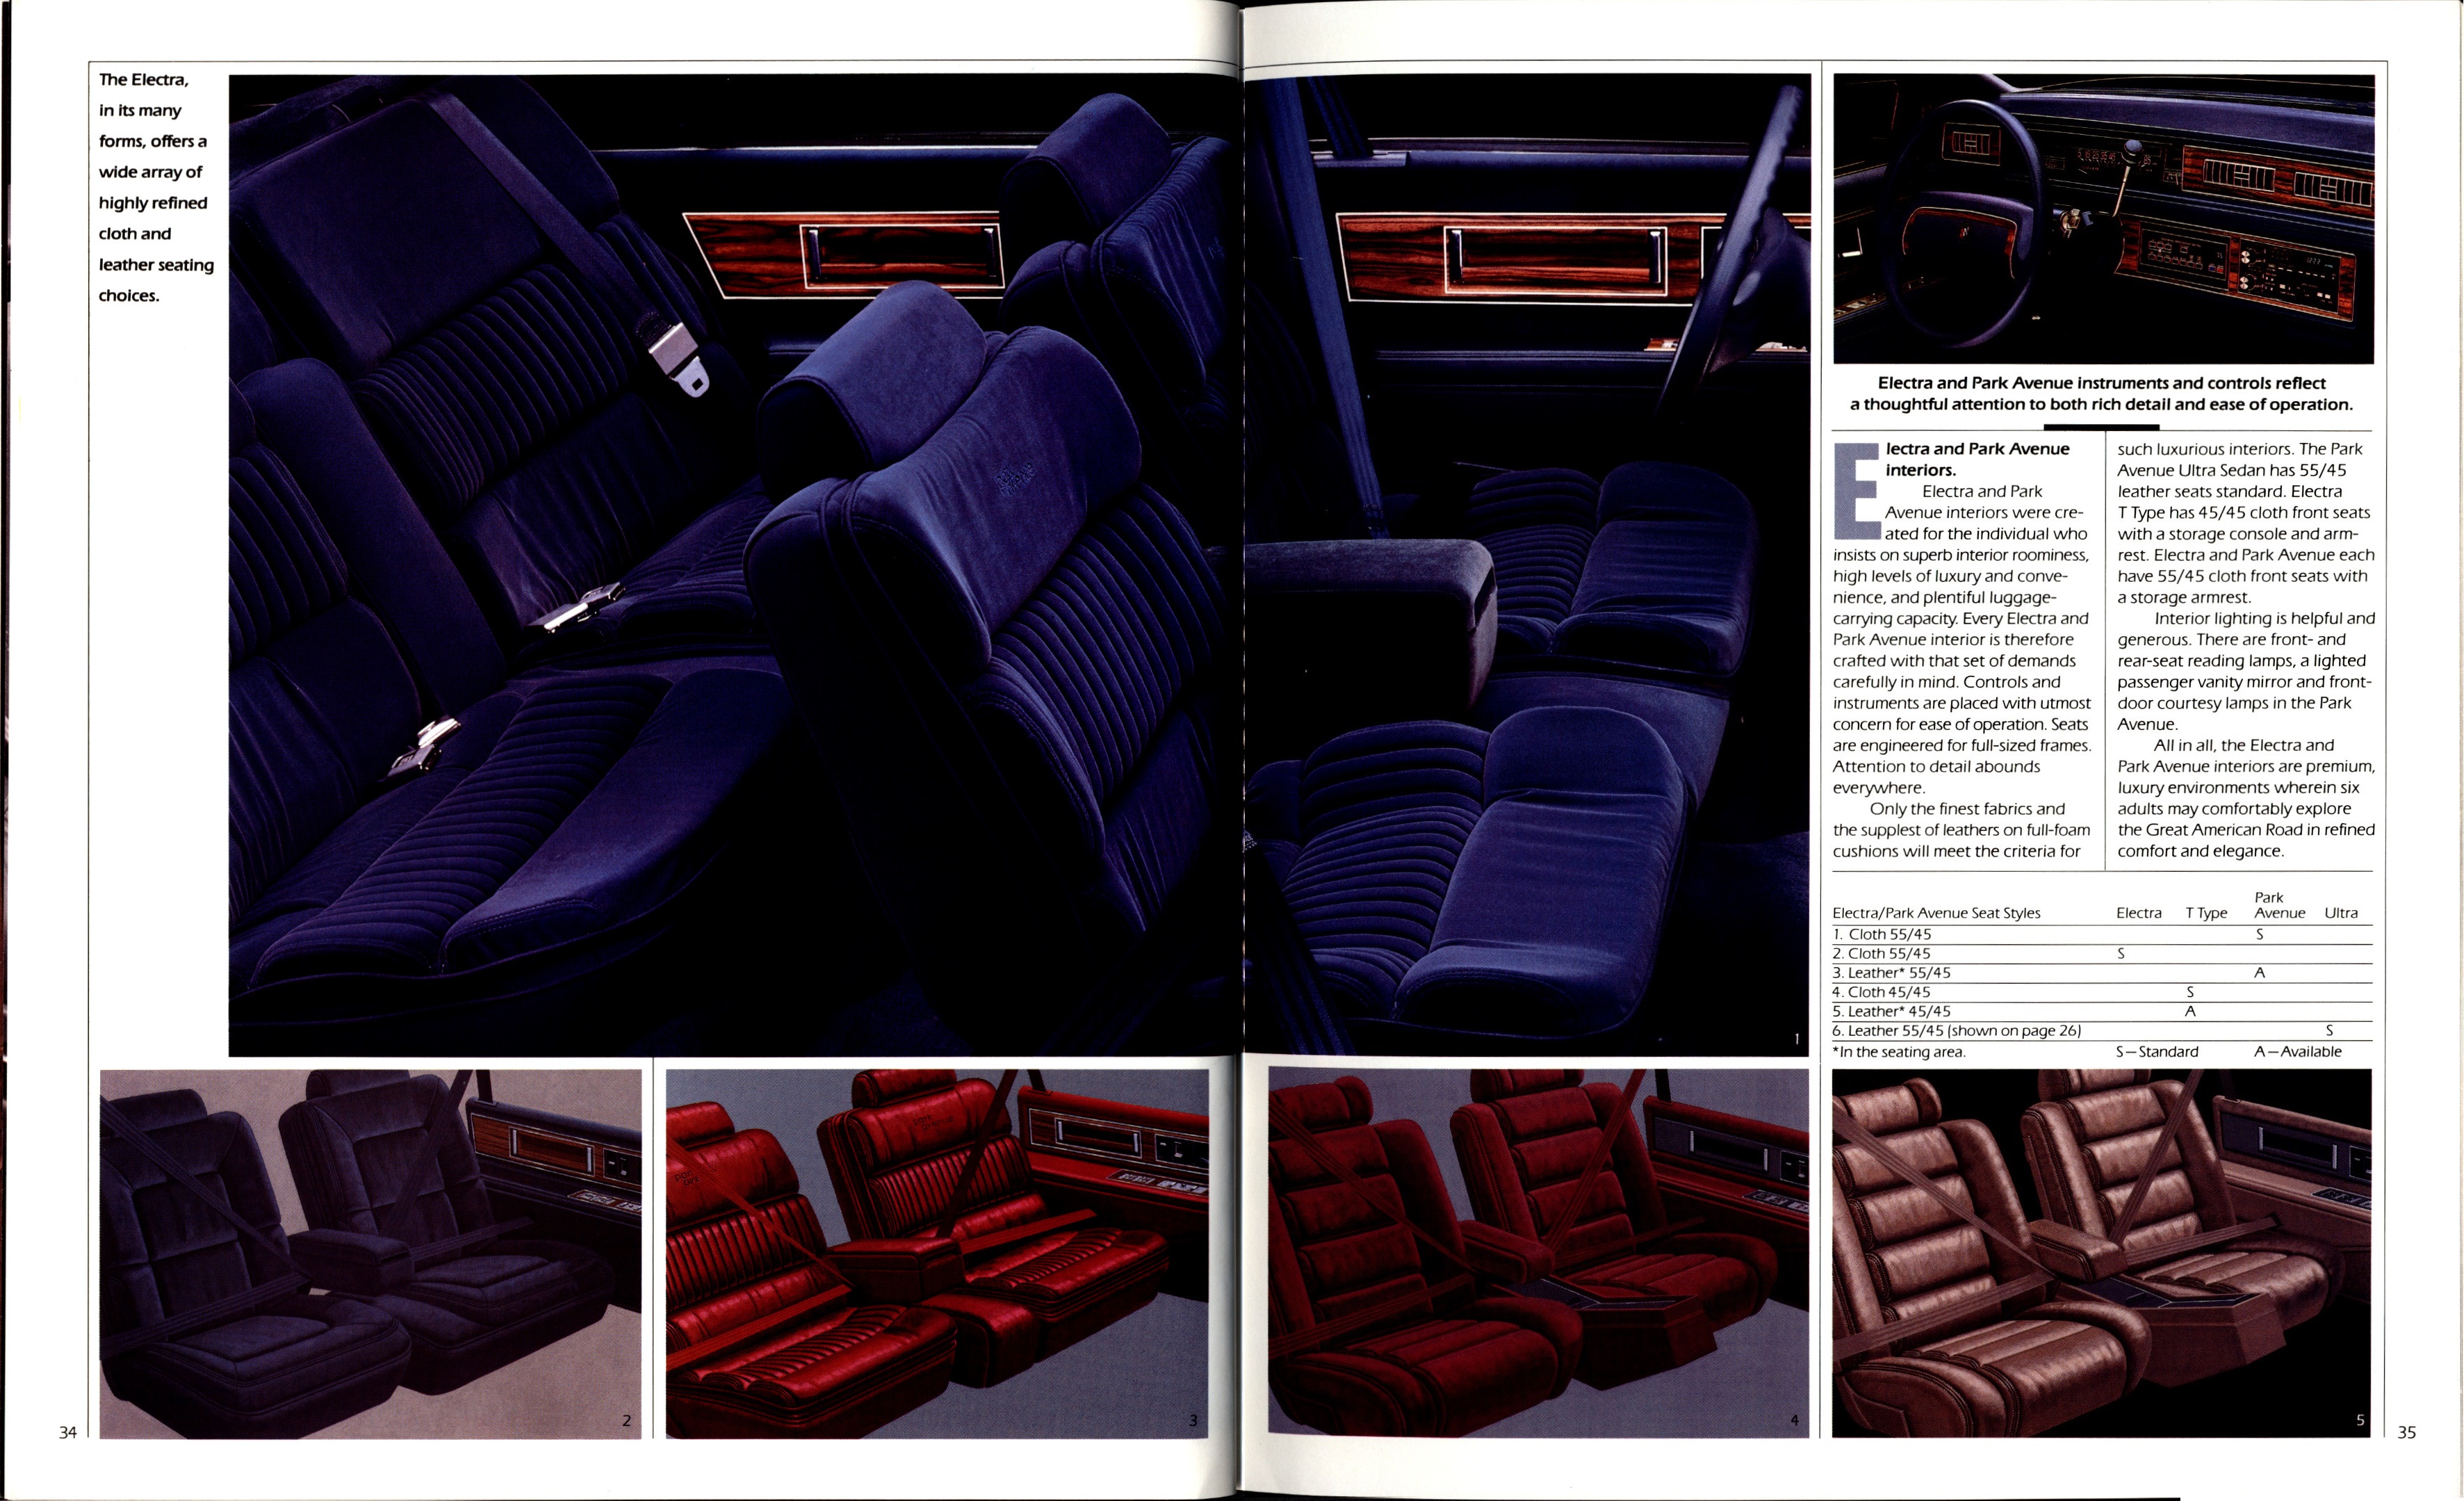 1989 Buick Full Line Prestige Brochure 34-35